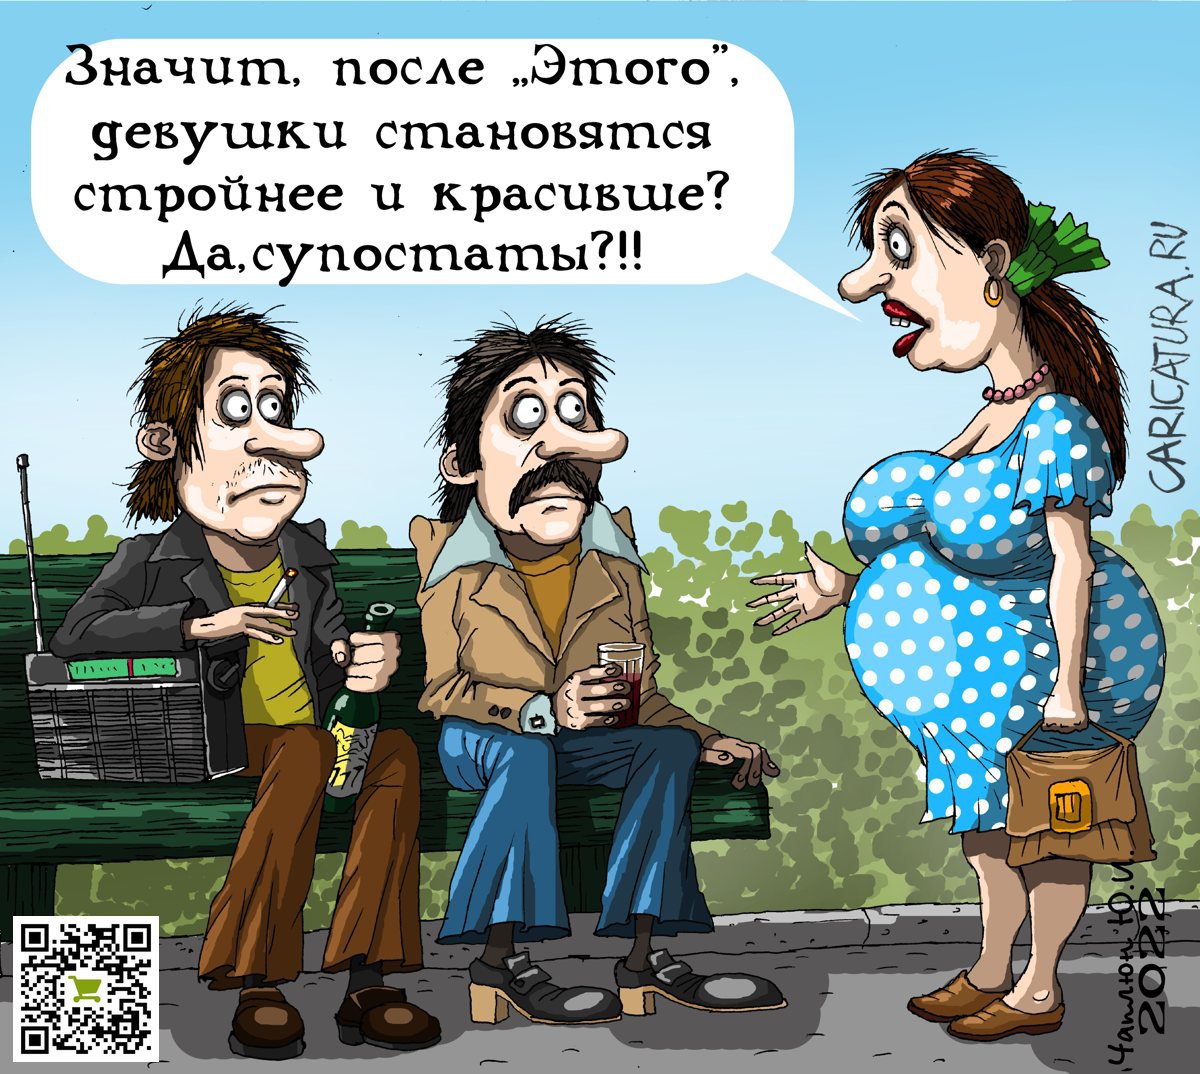 Карикатура "После "картошки" 1978", Теплый Телогрей